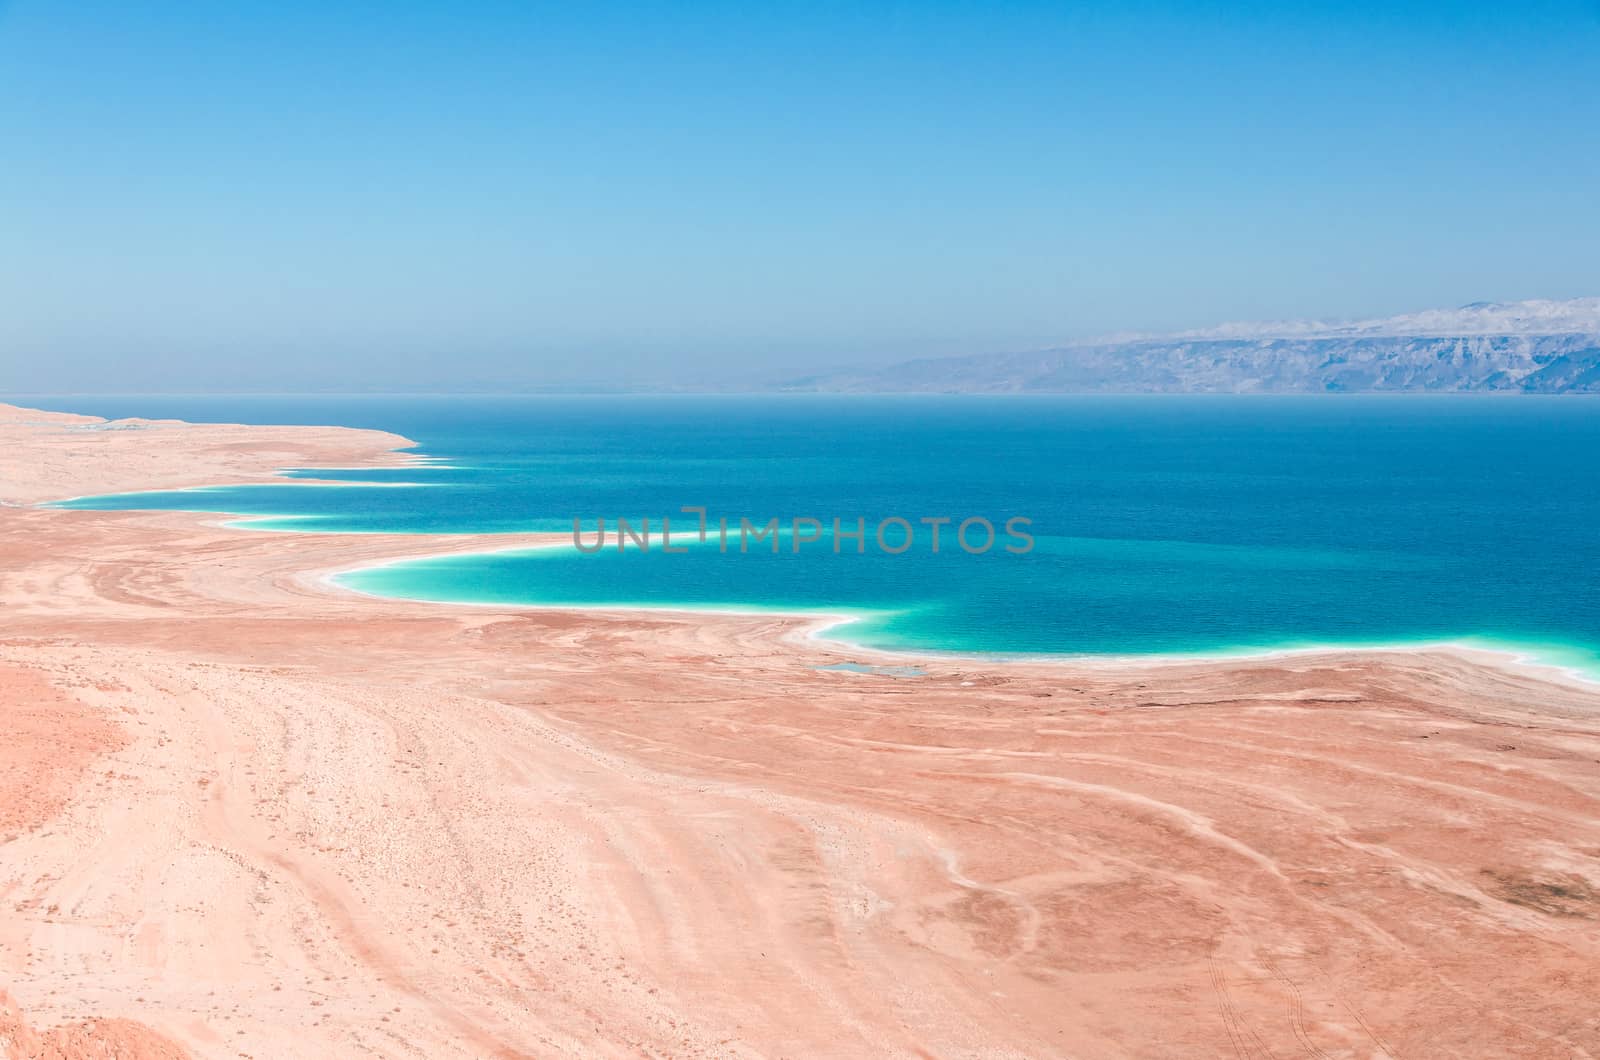 Dead Sea coastline in desert uninhabited extraterrestrial landscape aerial view